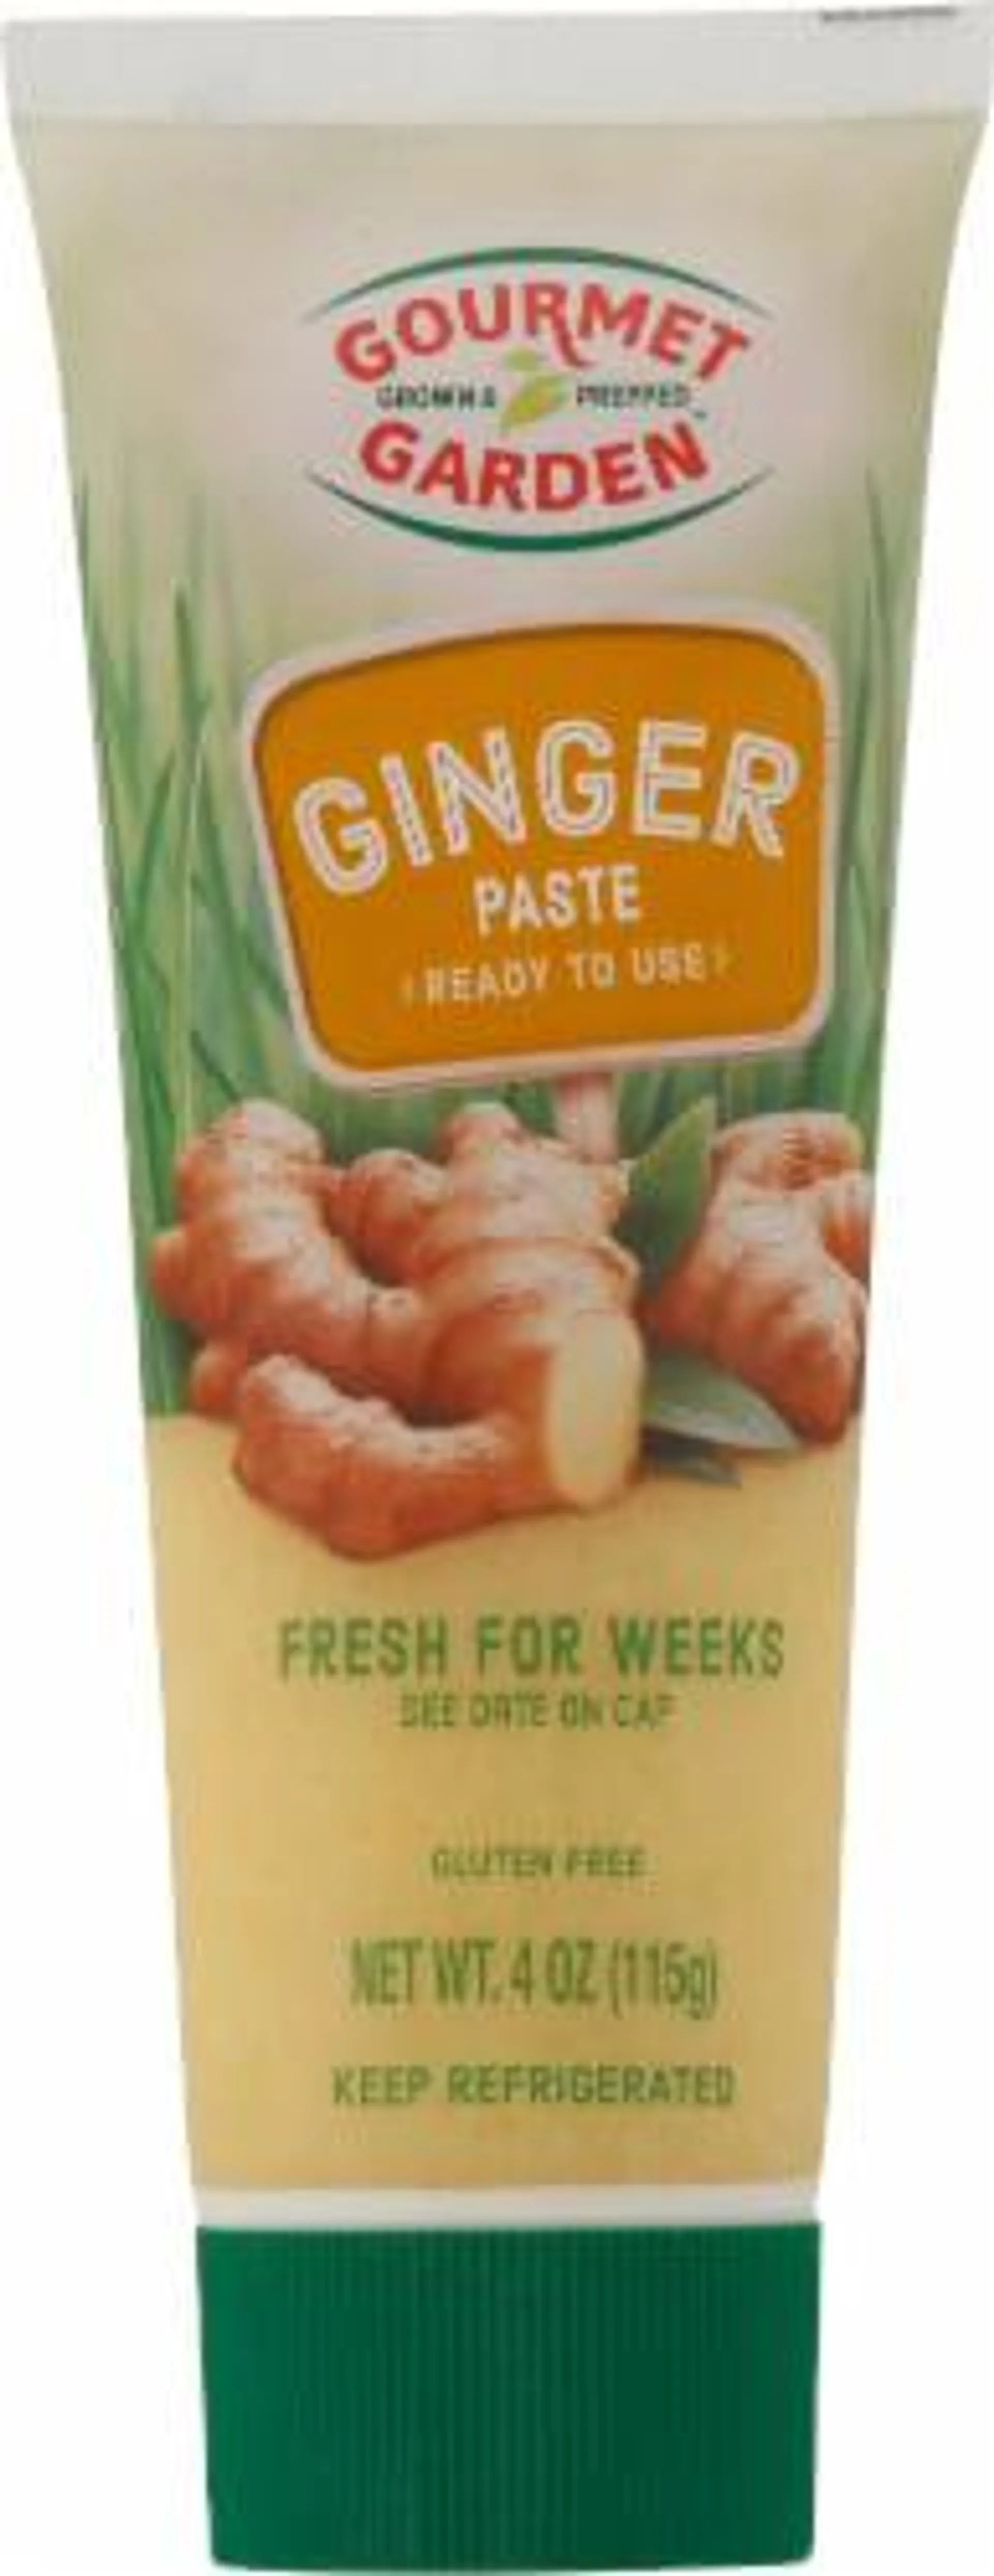 Gourmet Garden™ Ginger Stir-In Paste